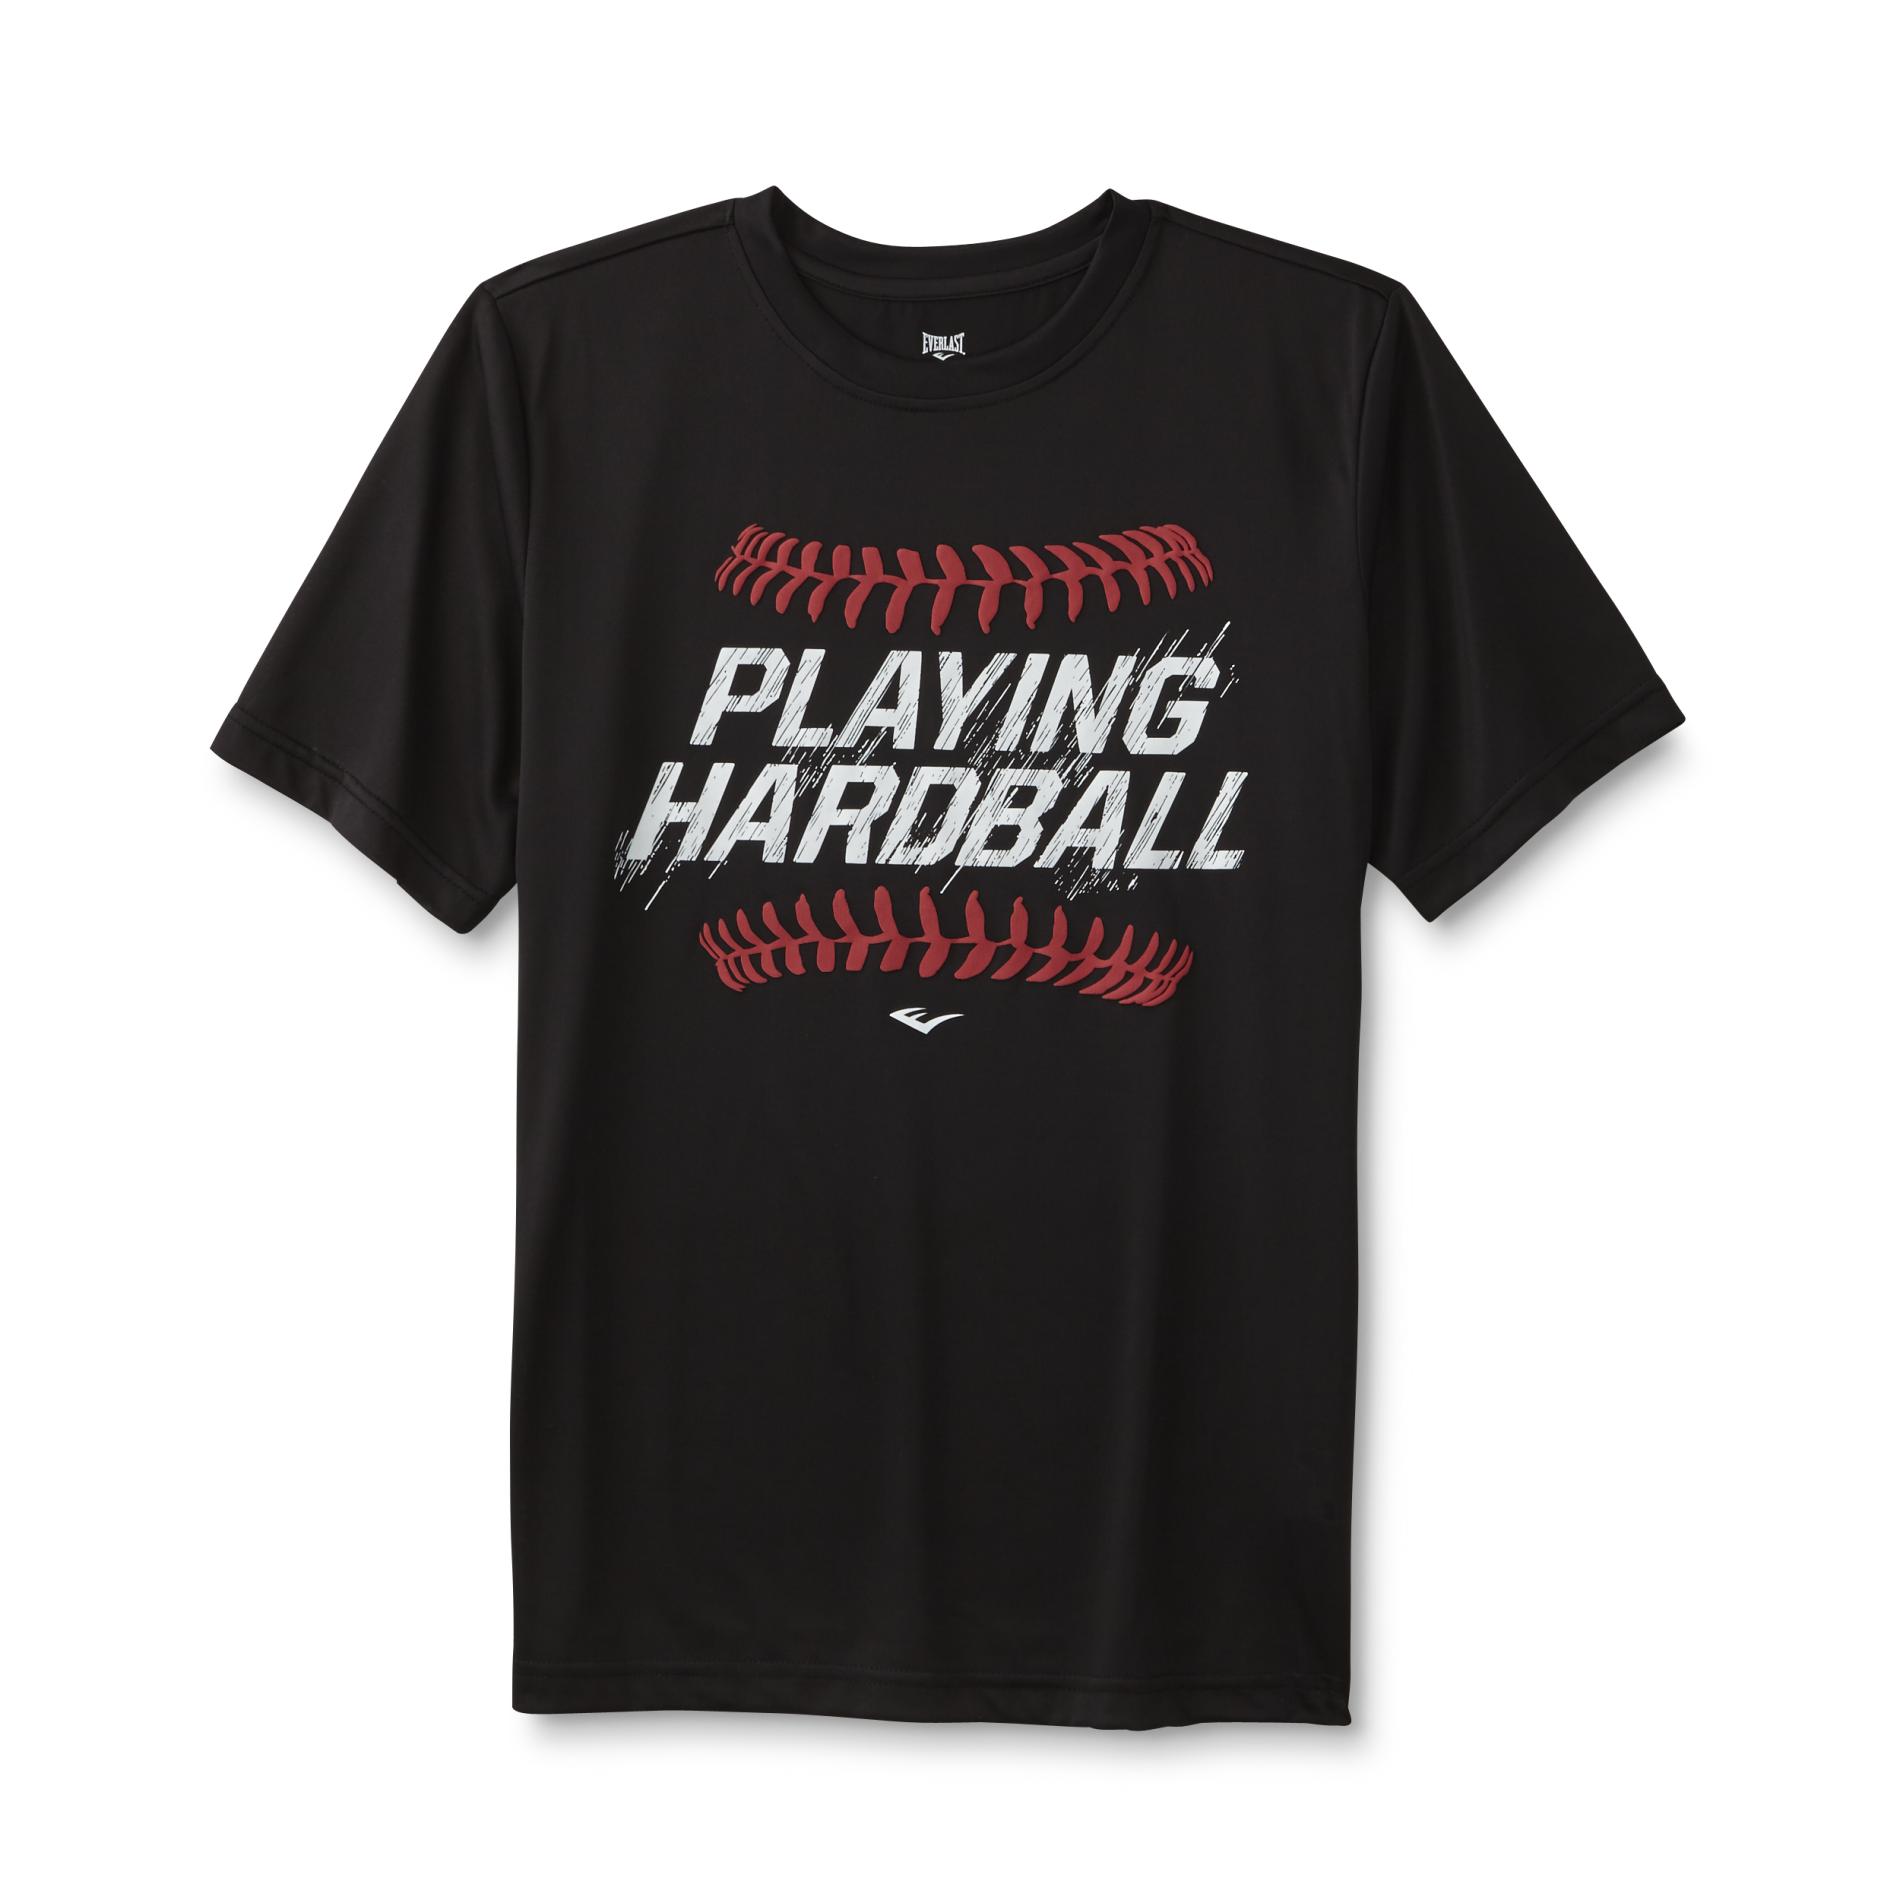 Everlast&reg; Boy's Graphic Athletic T-Shirt - Playing Hardball